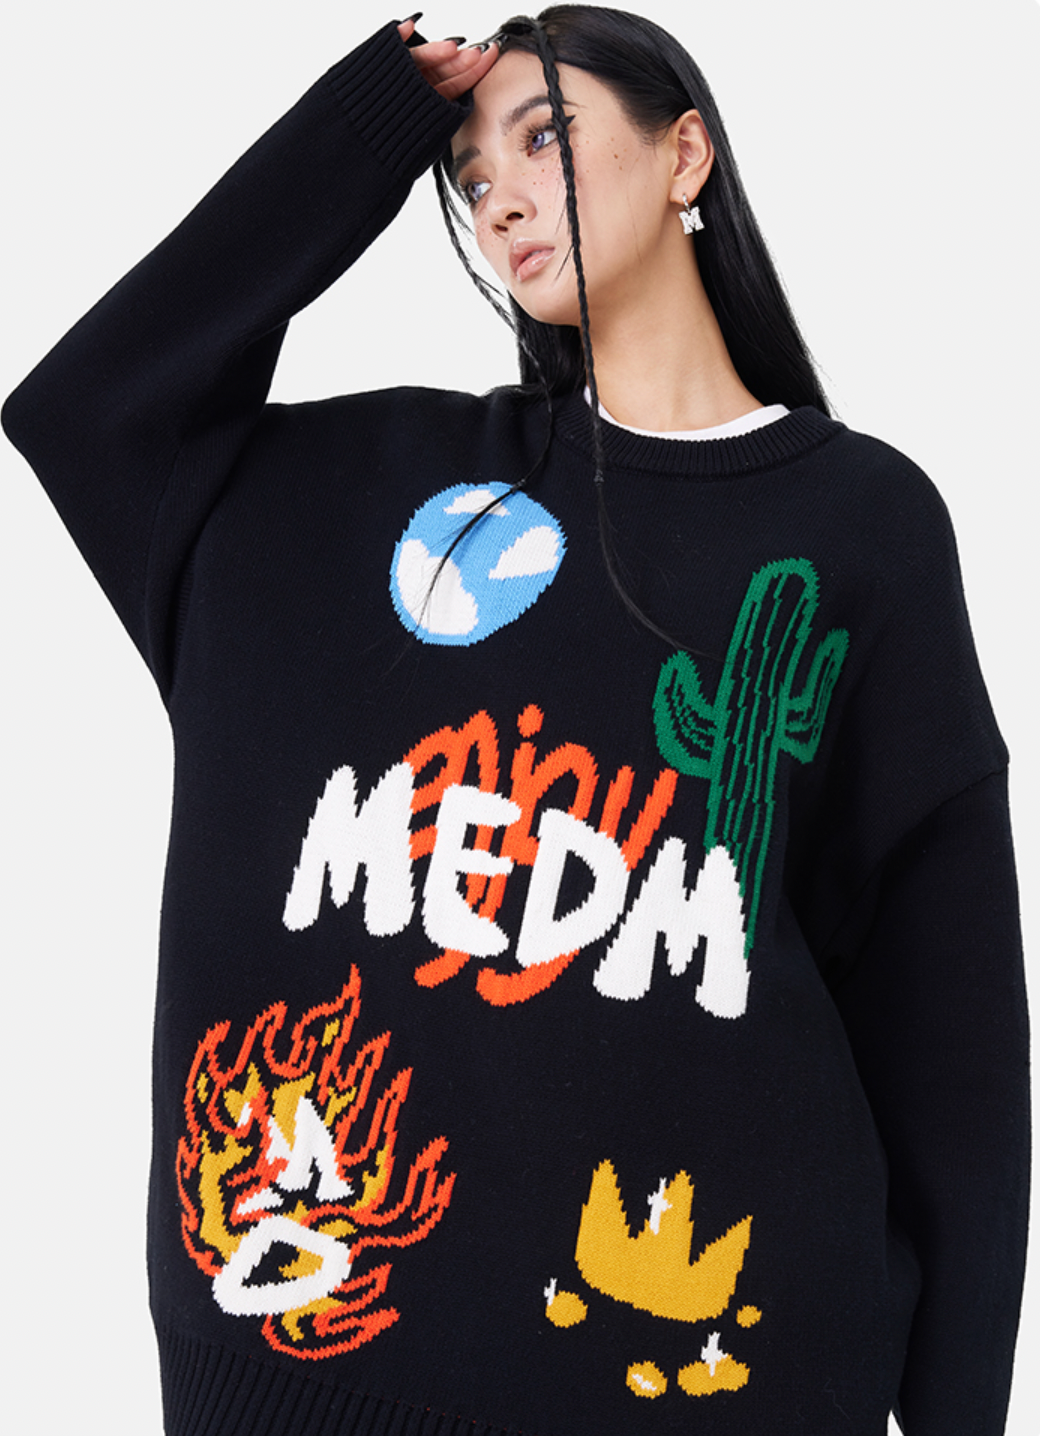 MEDM Campfire Cactus Knit Sweater